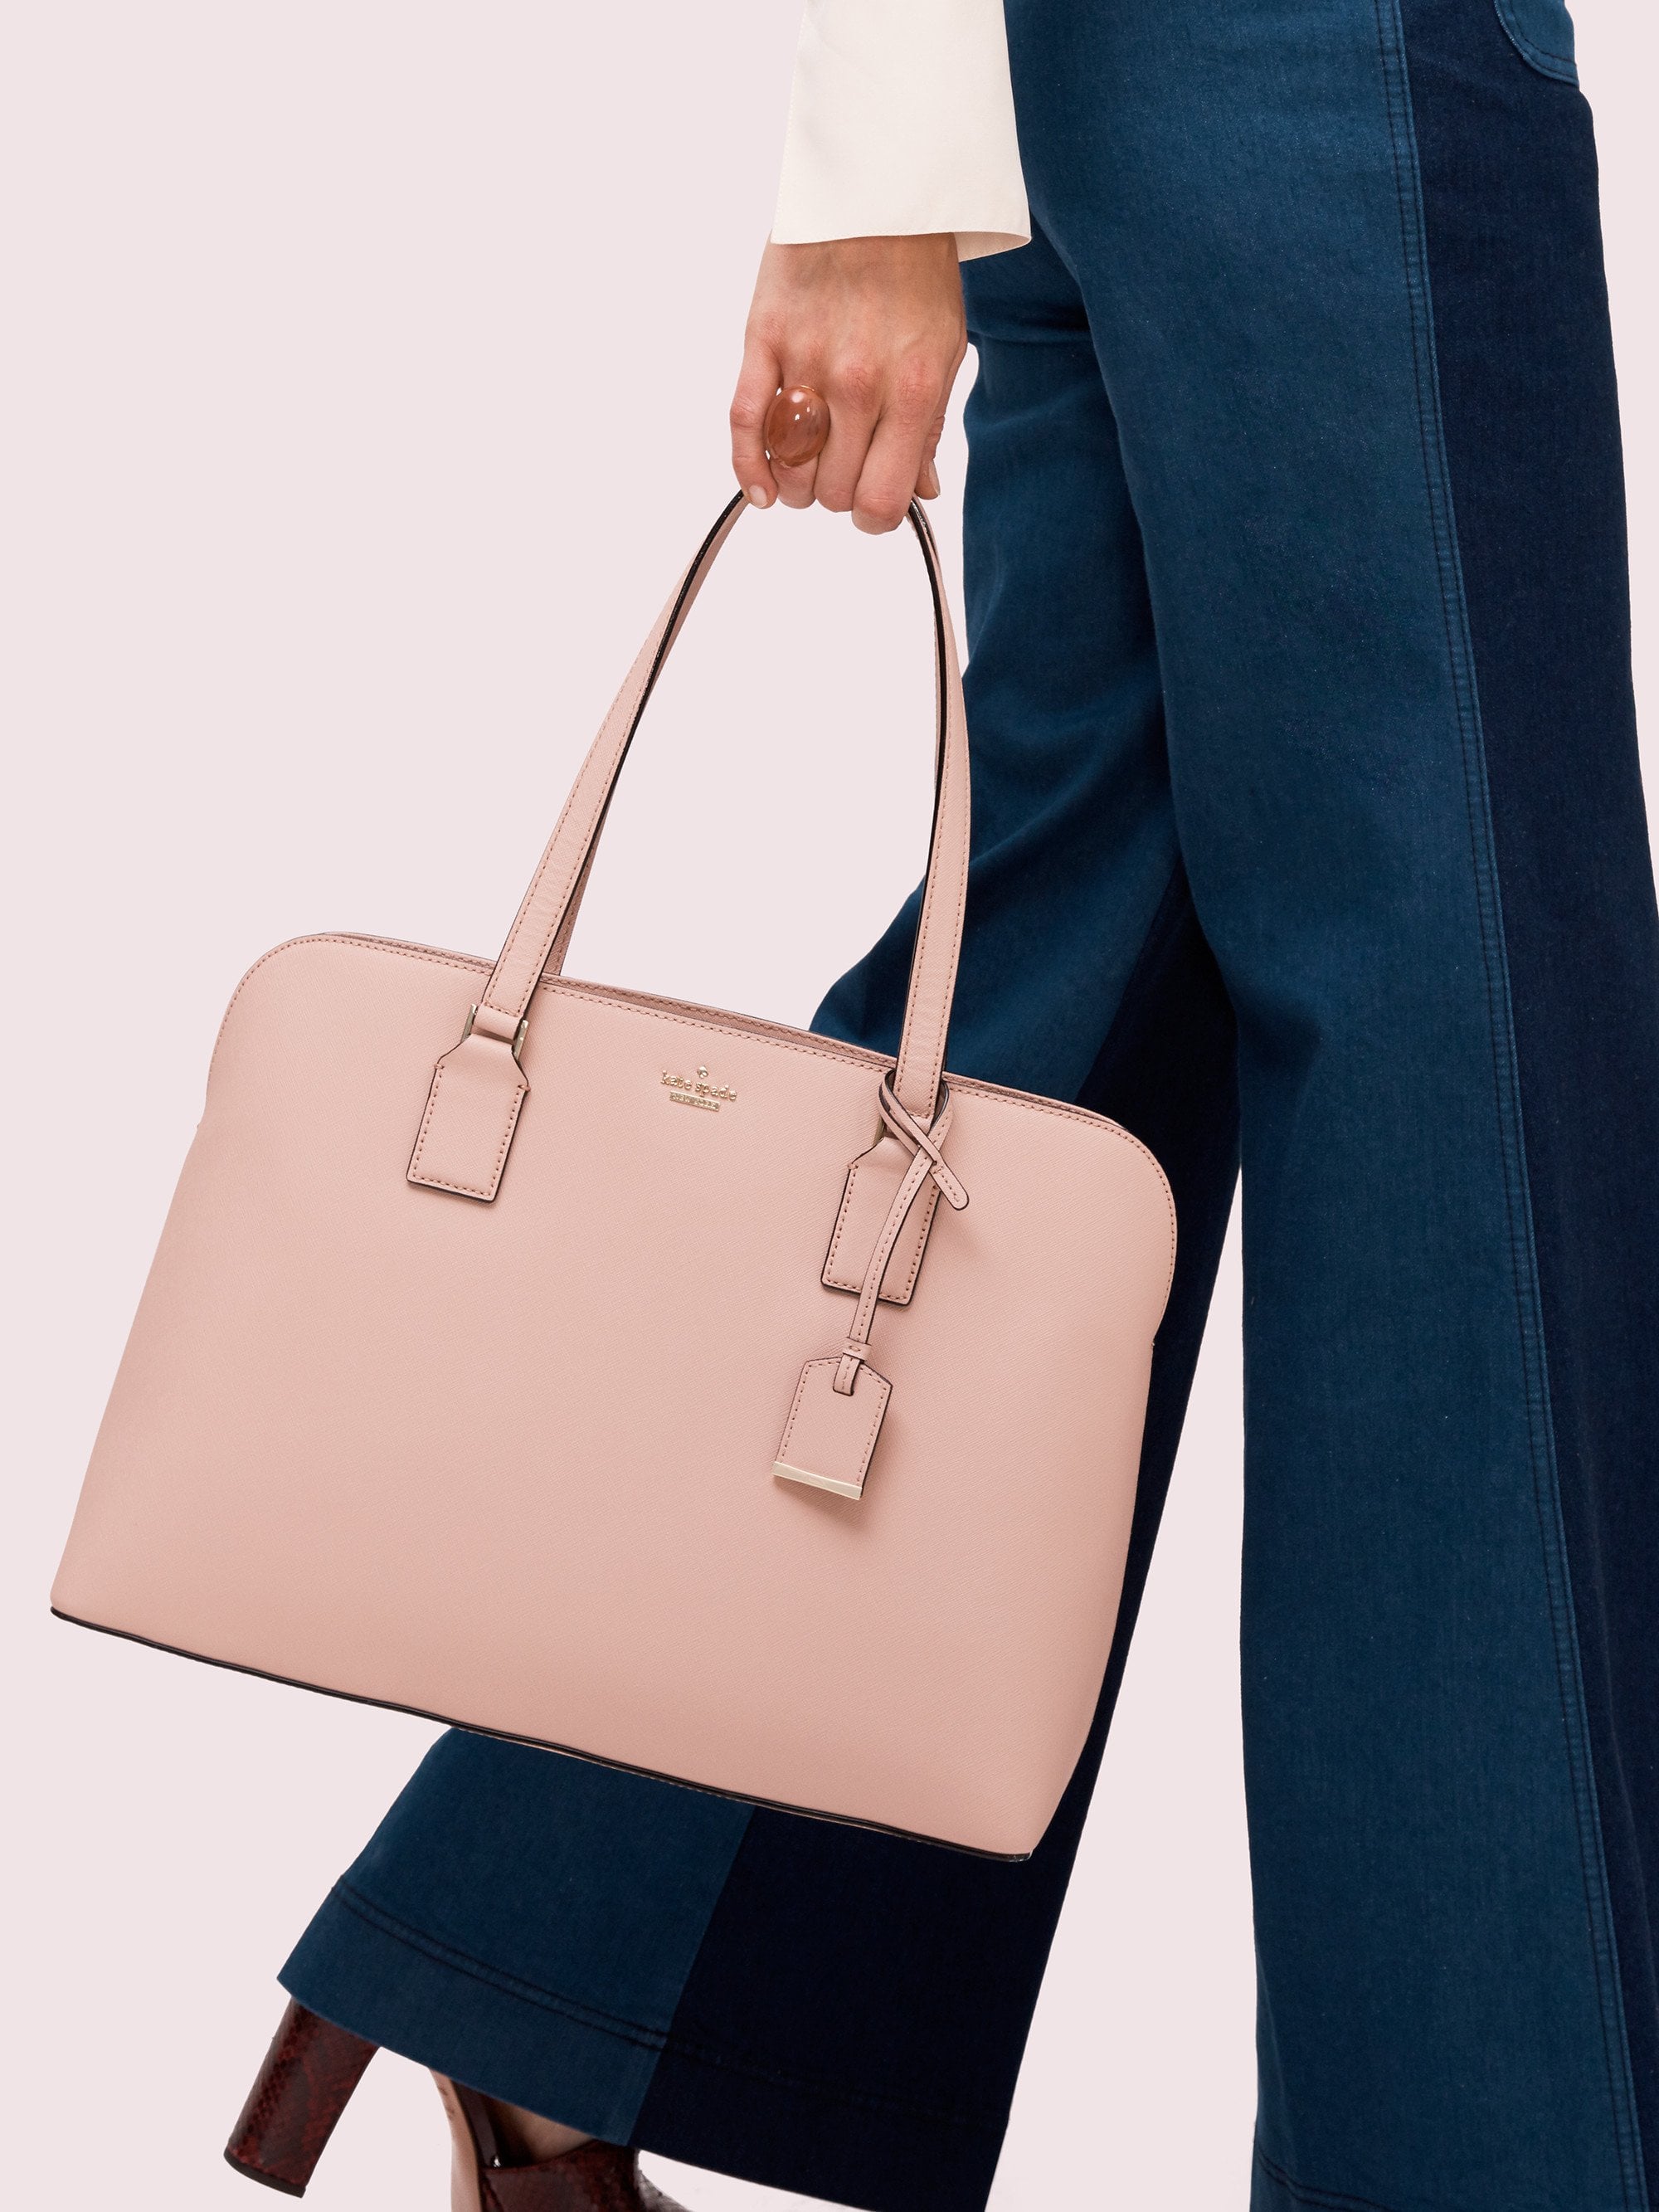 kate spade new york handbags & purses